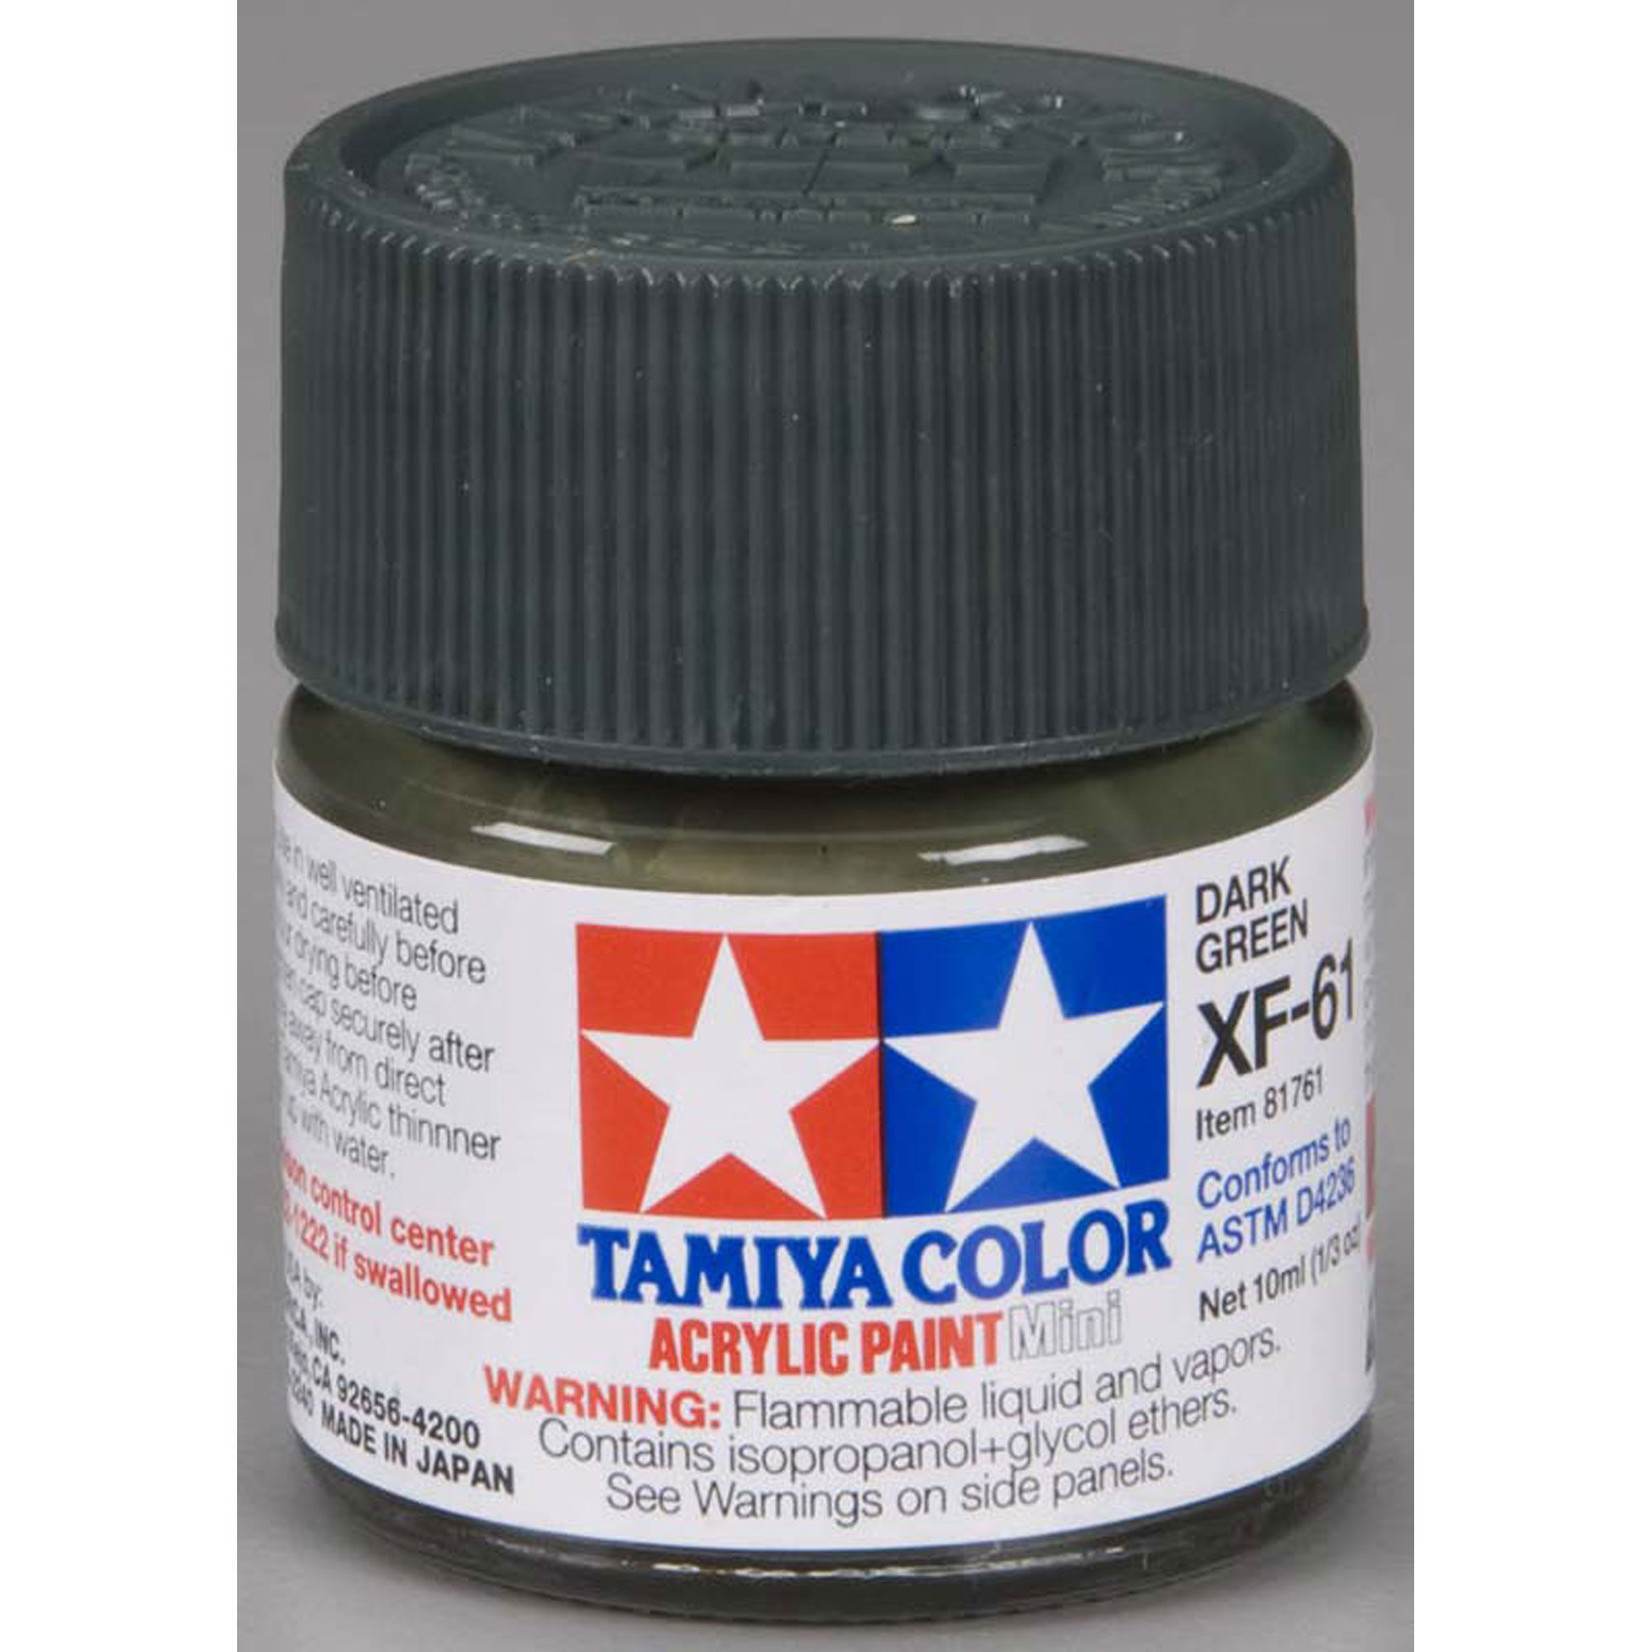 Tamiya Acrylic Mini XF61, Dark Green